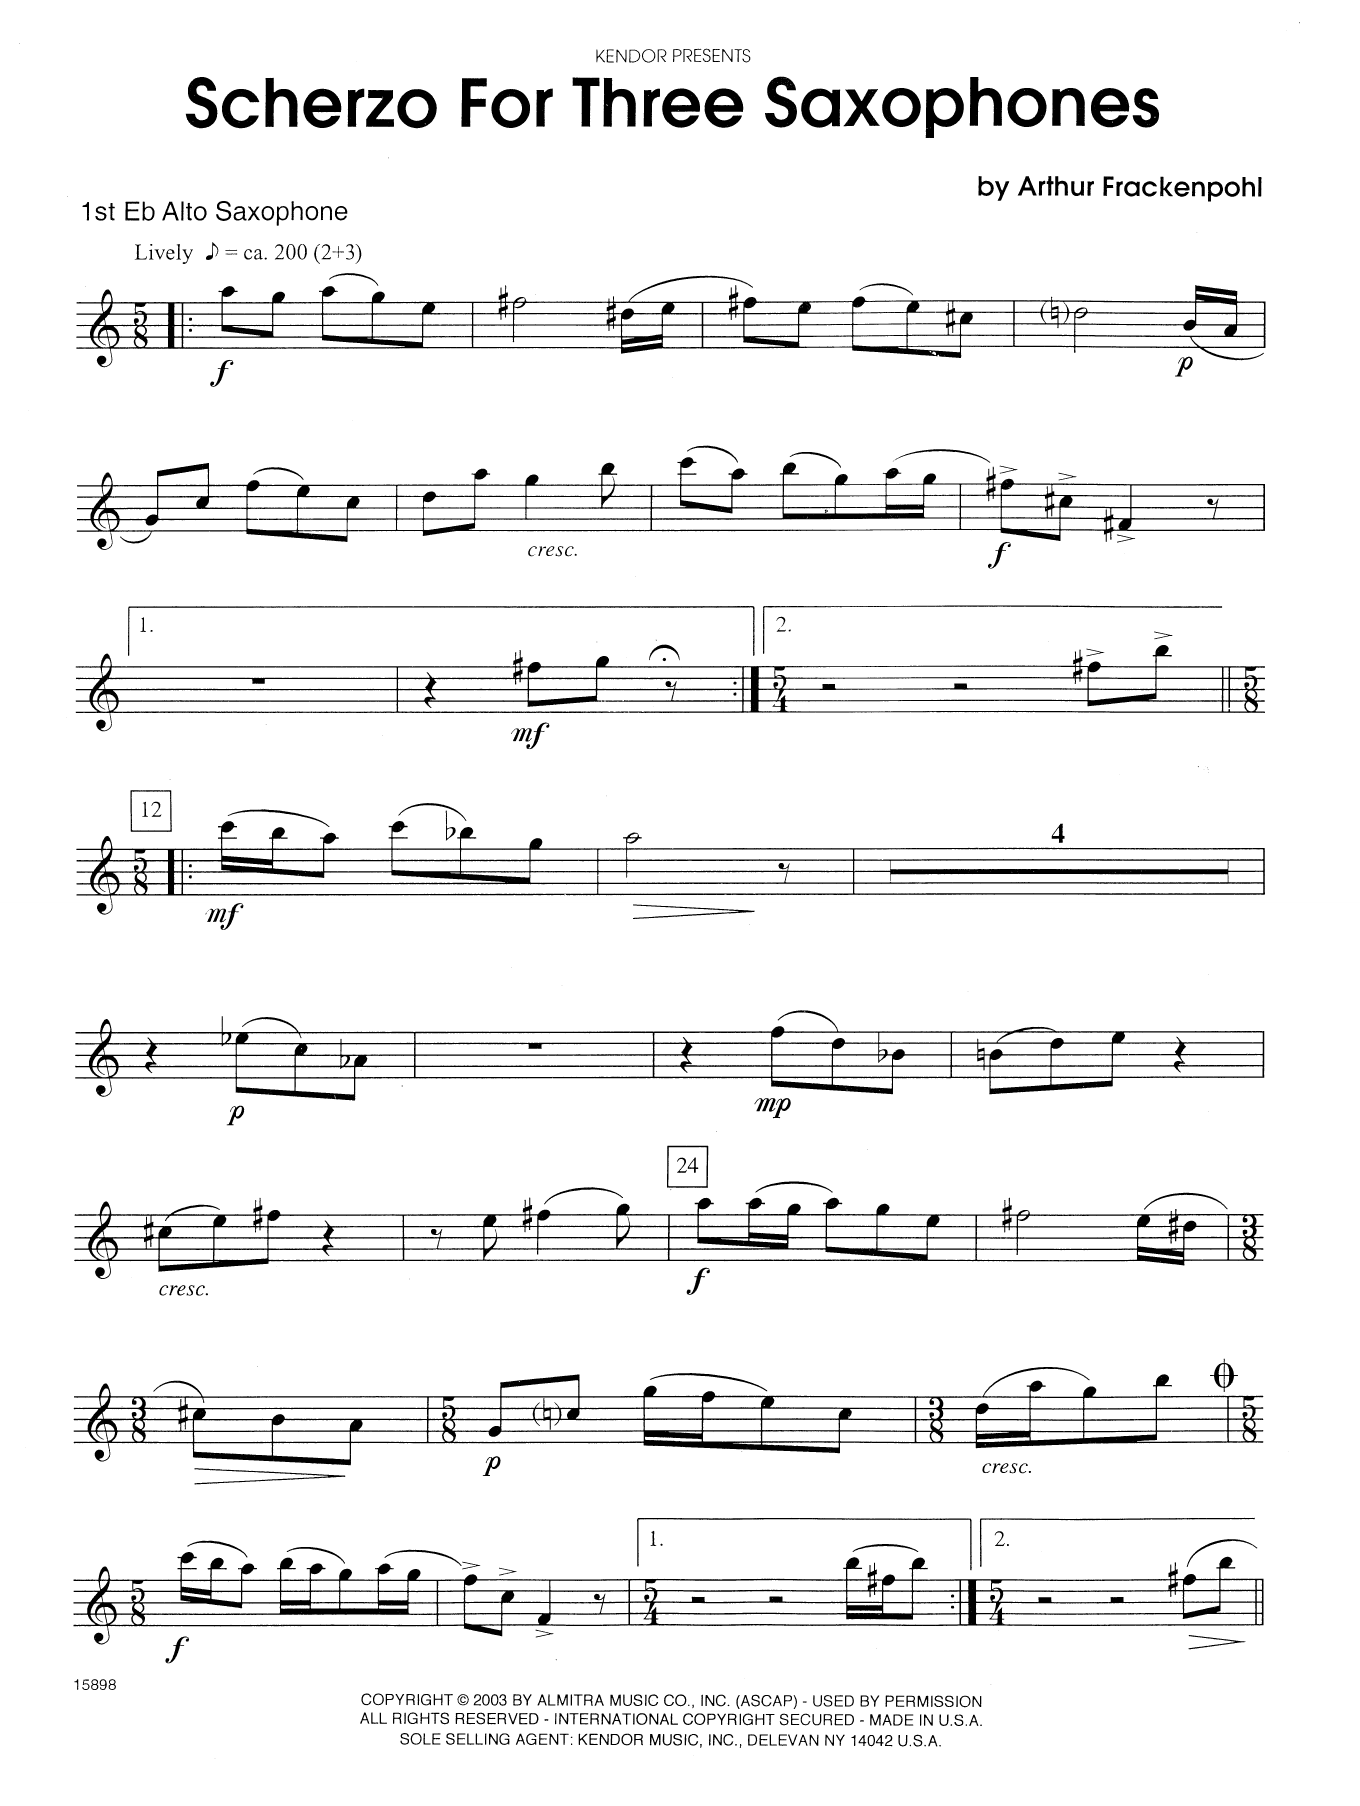 Download Arthur Frackenpohl Scherzo For Three Saxophones - 1st Eb A Sheet Music